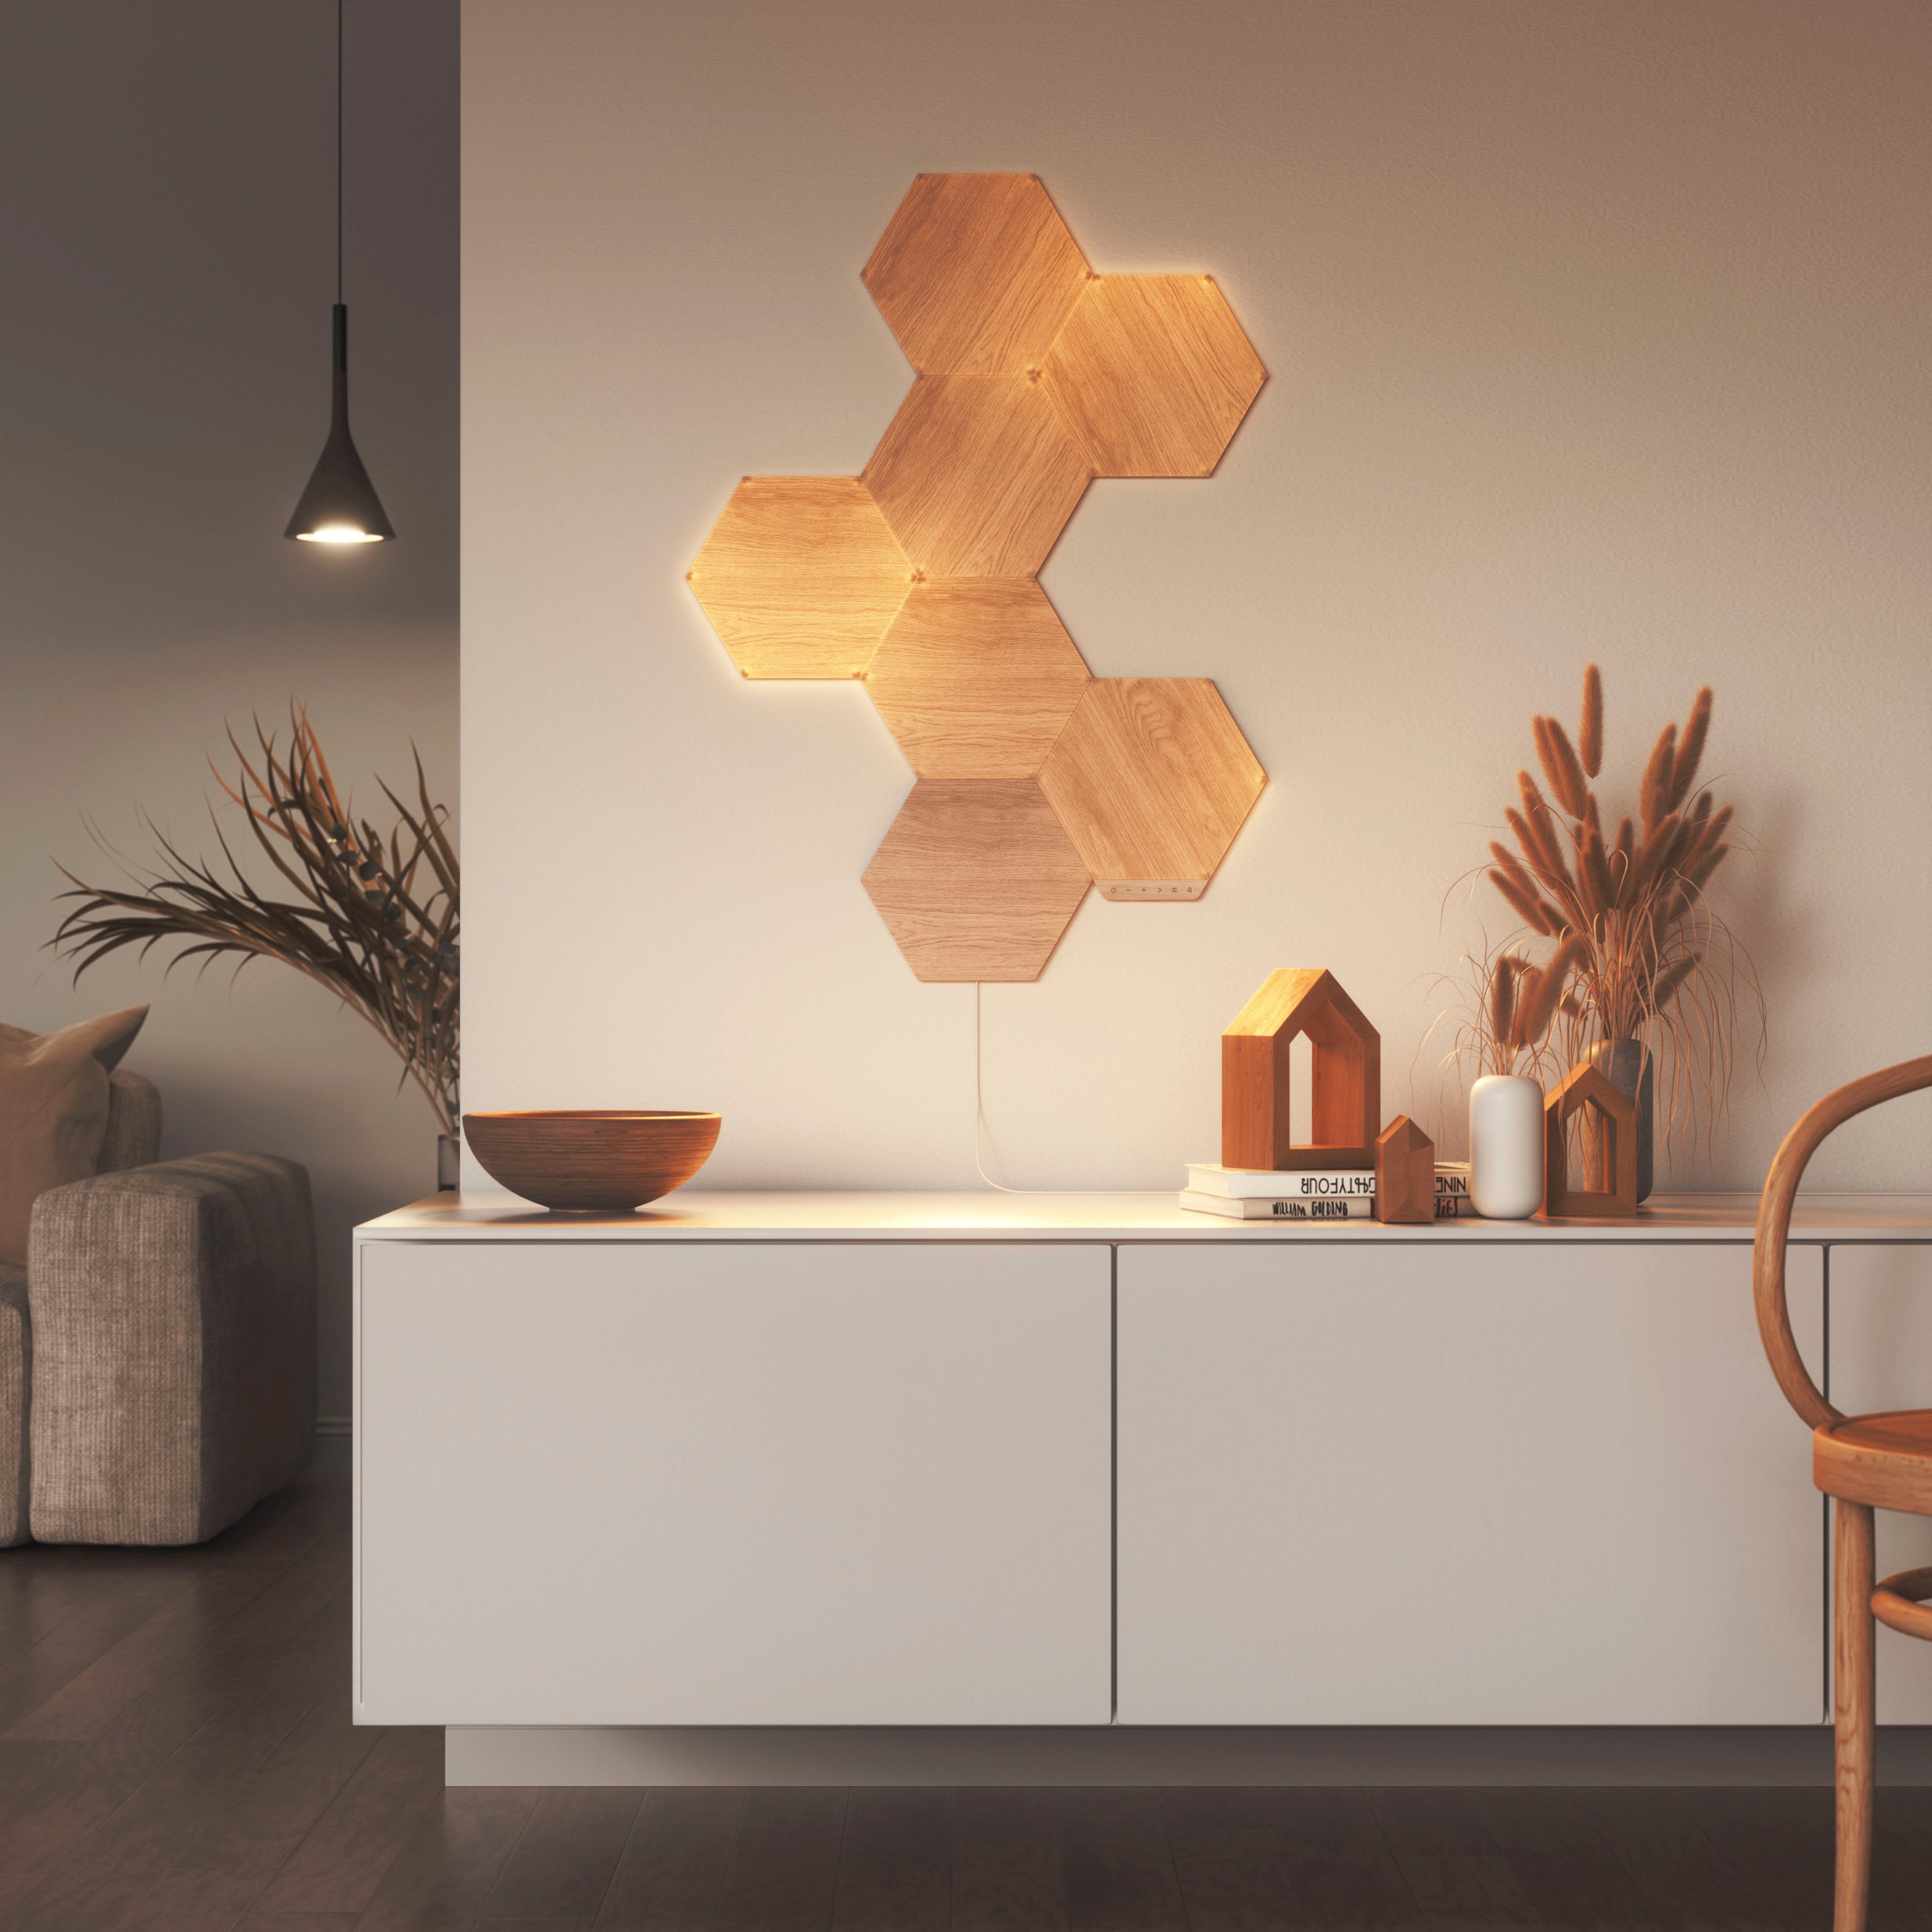 Nanoleaf Elements Hexagons (7 Kit Buy Best Smarter Look - Wood Panels) NL52-K-7003HB-7PK